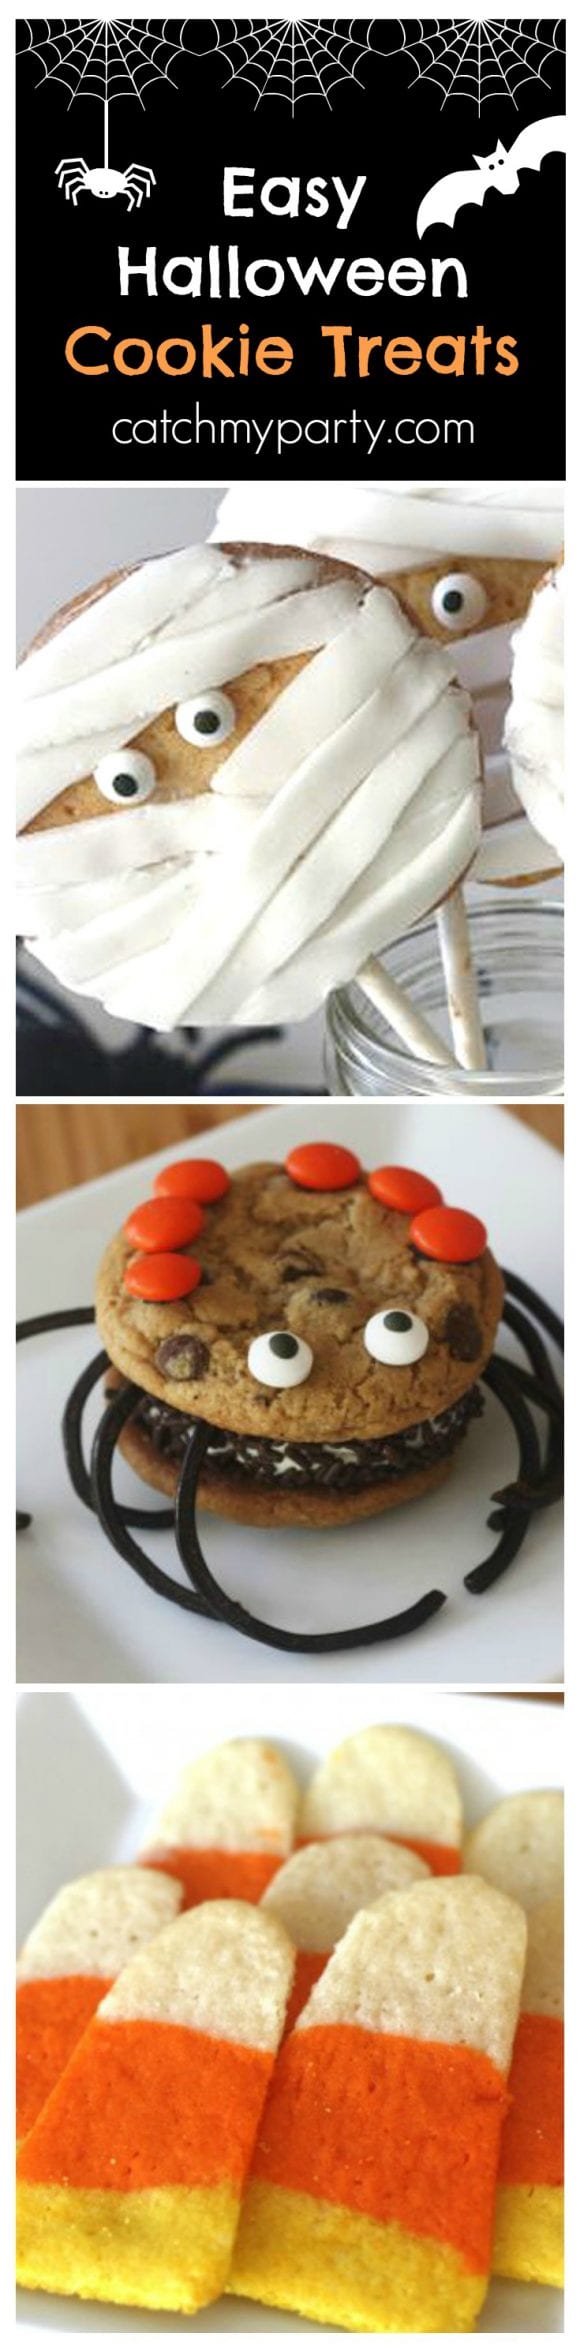 Easy Halloween Cookie Treats | CatchMyParty.com